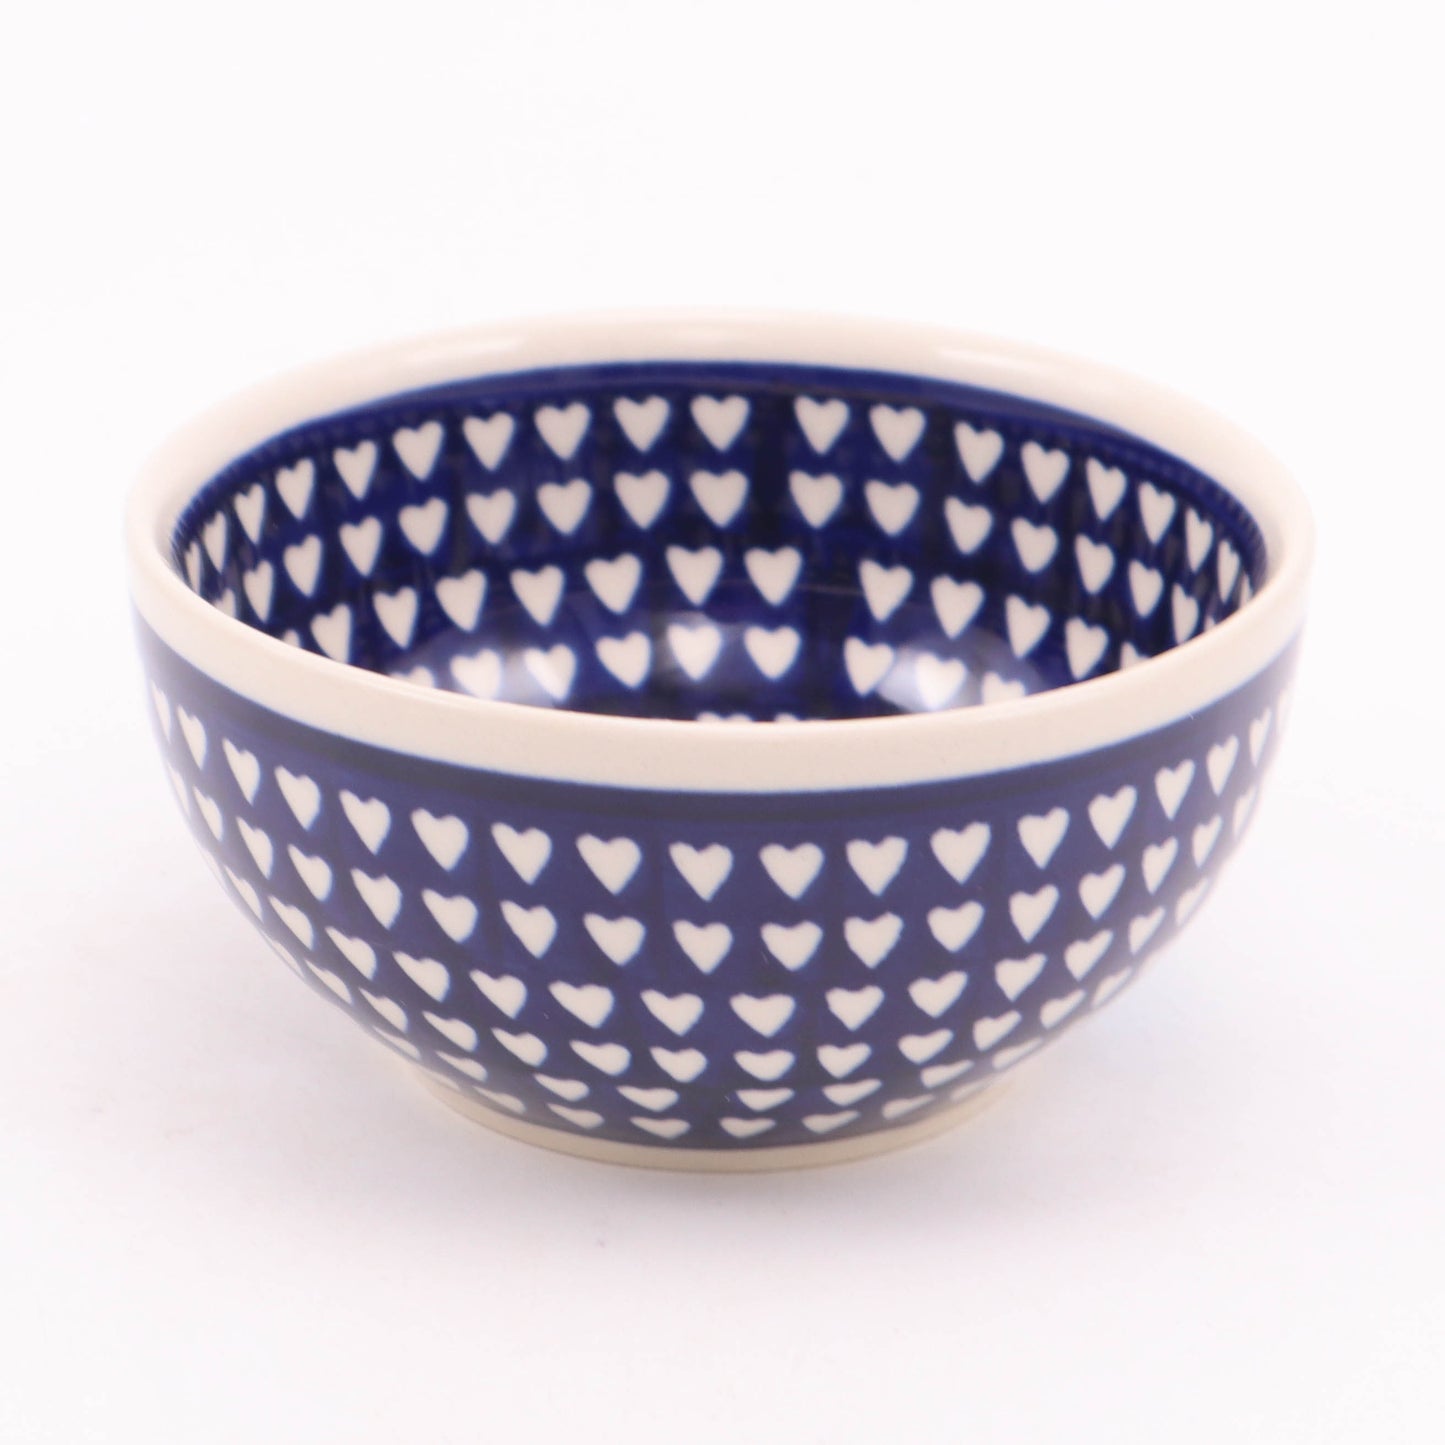 5" Rice Bowl. Pattern: Heart 2 Heart